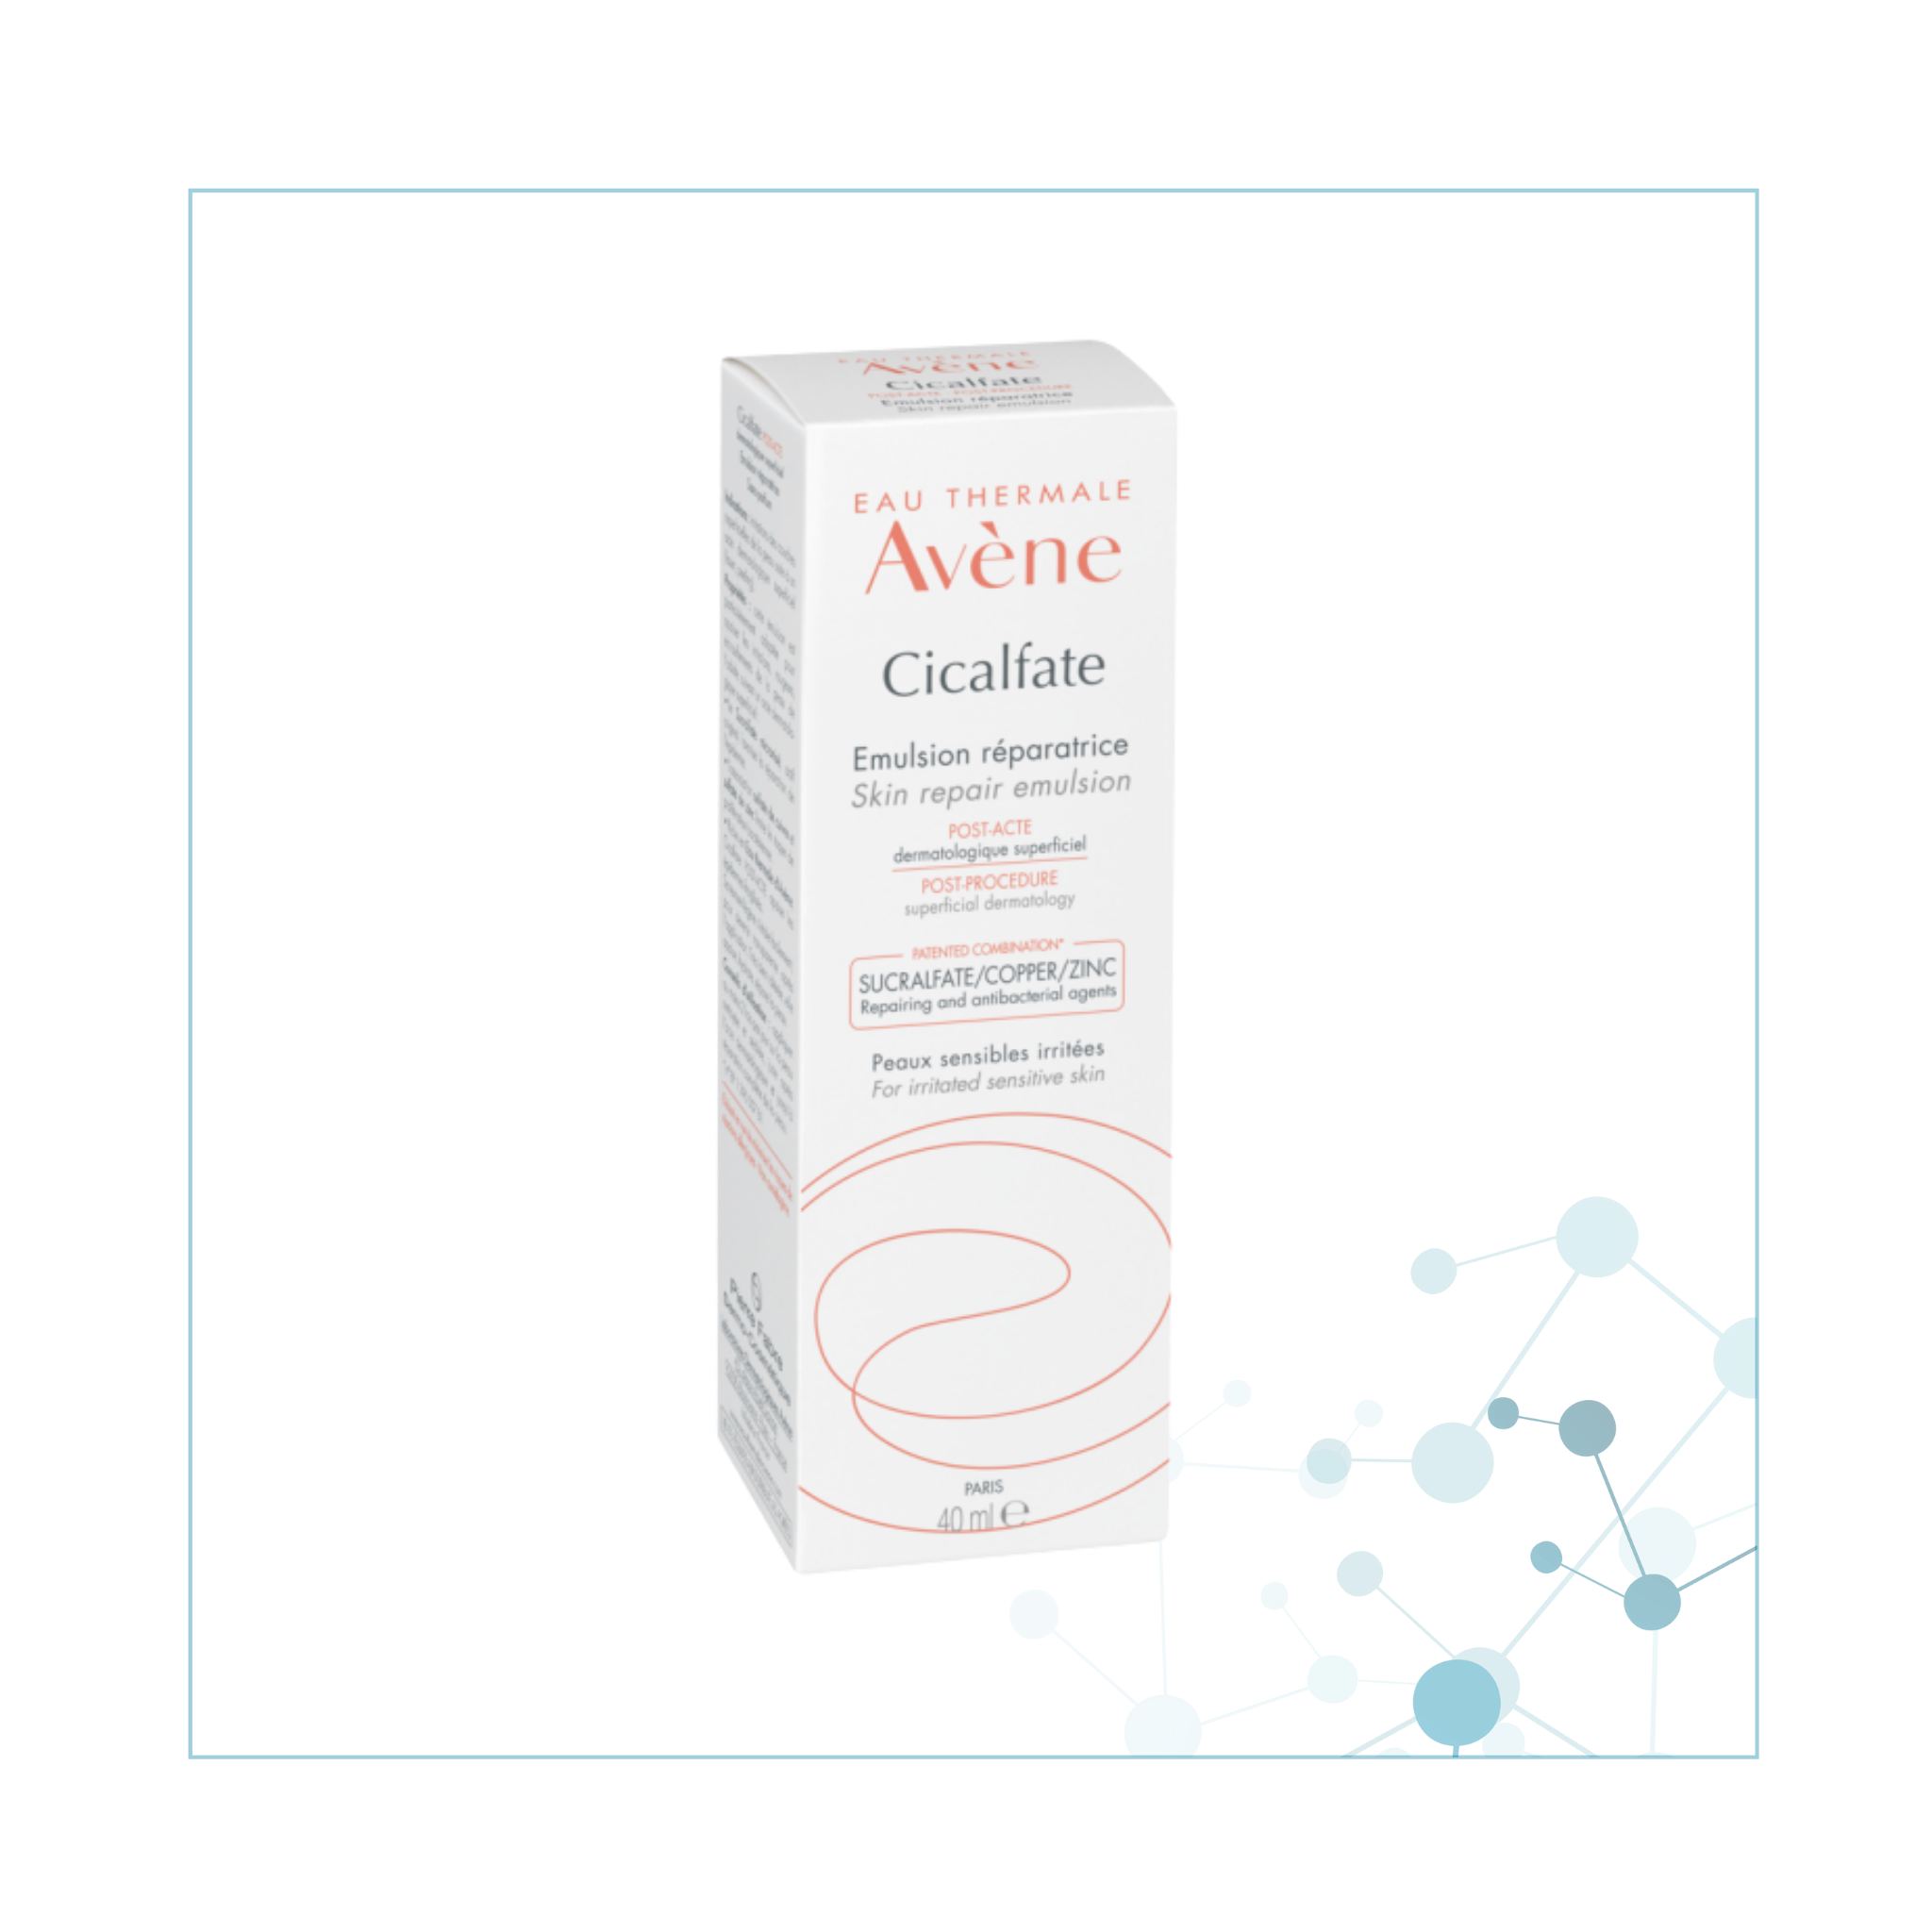 Avène Cicalfate Post-Procedure Skin Repair Emulsion –